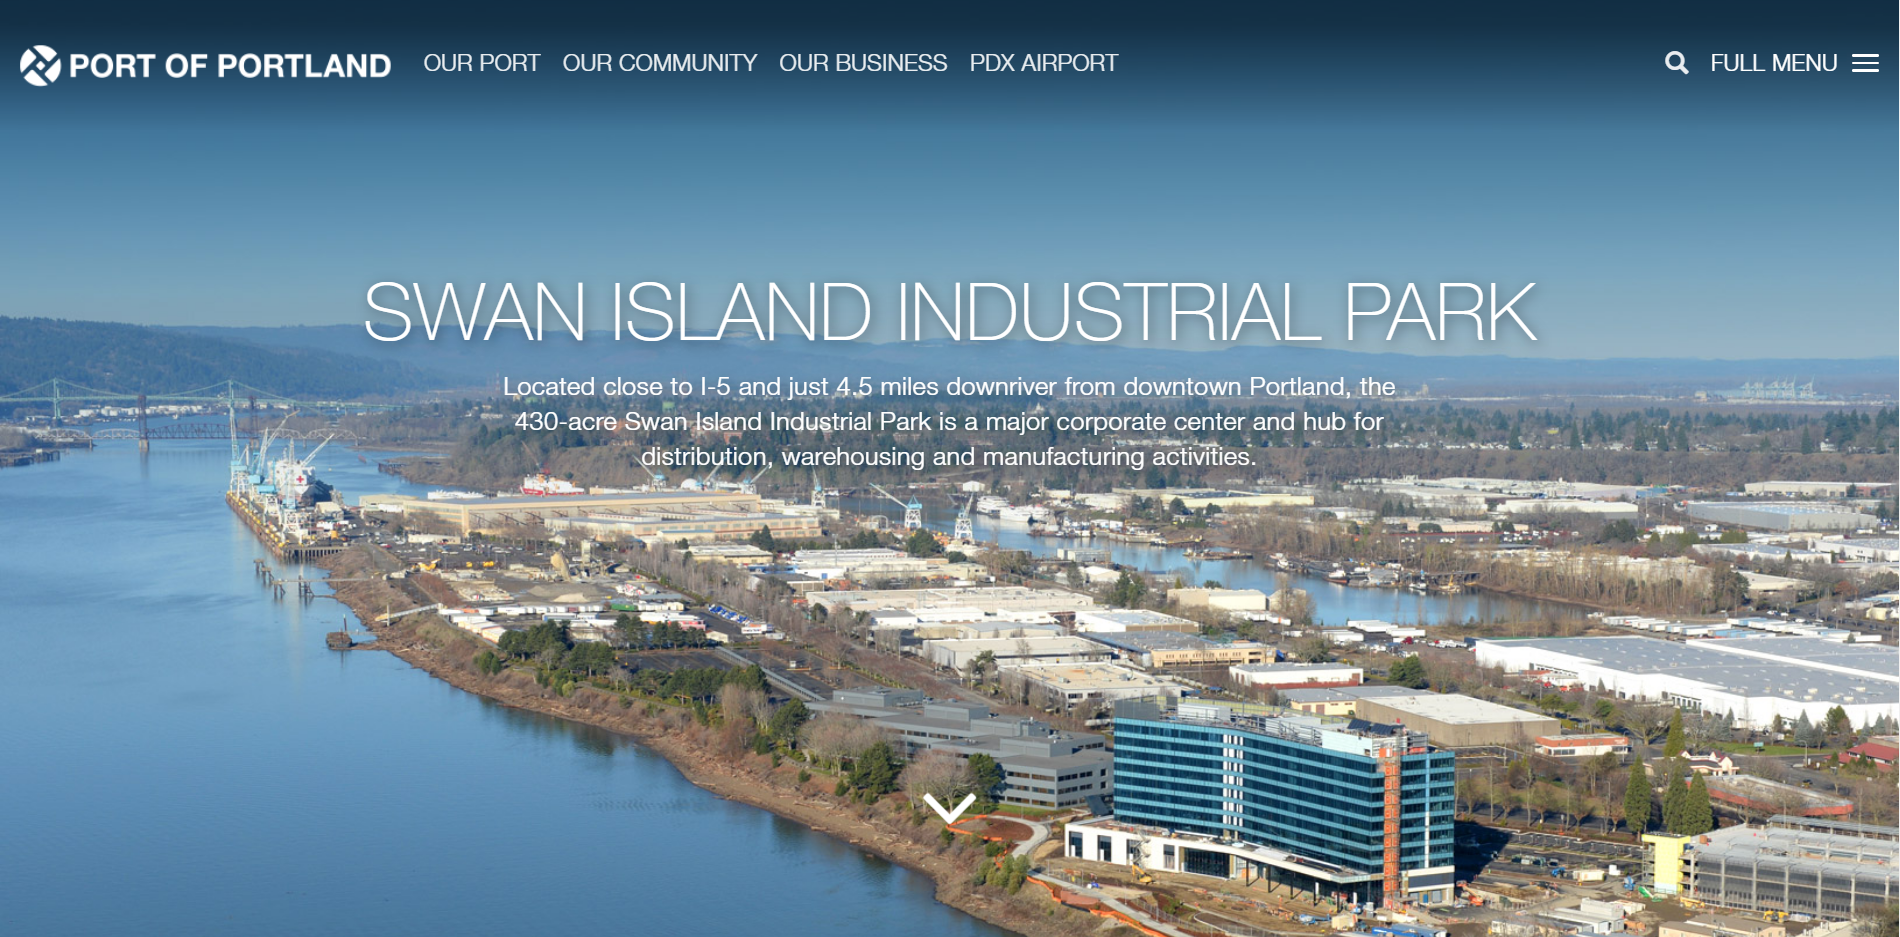 Swan Island Industrial Park